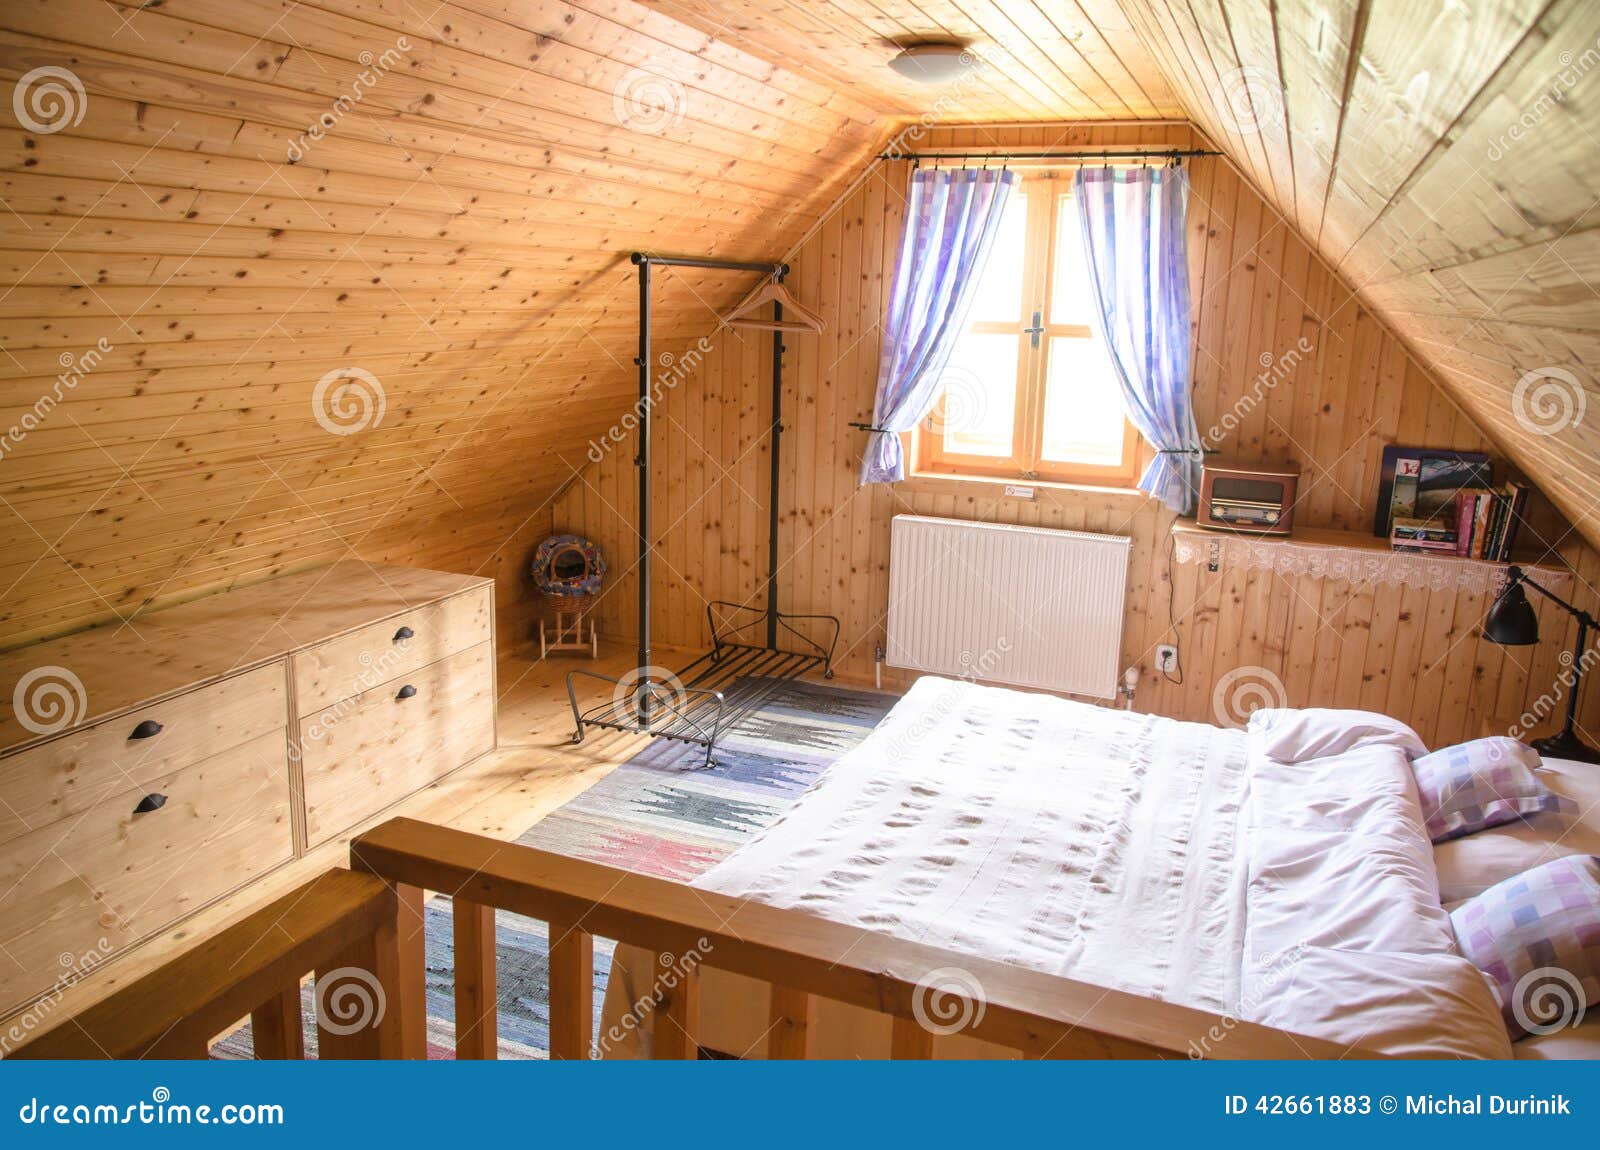 Log Cabin Cozy Rustic Interior View Stock Photo - Image ...